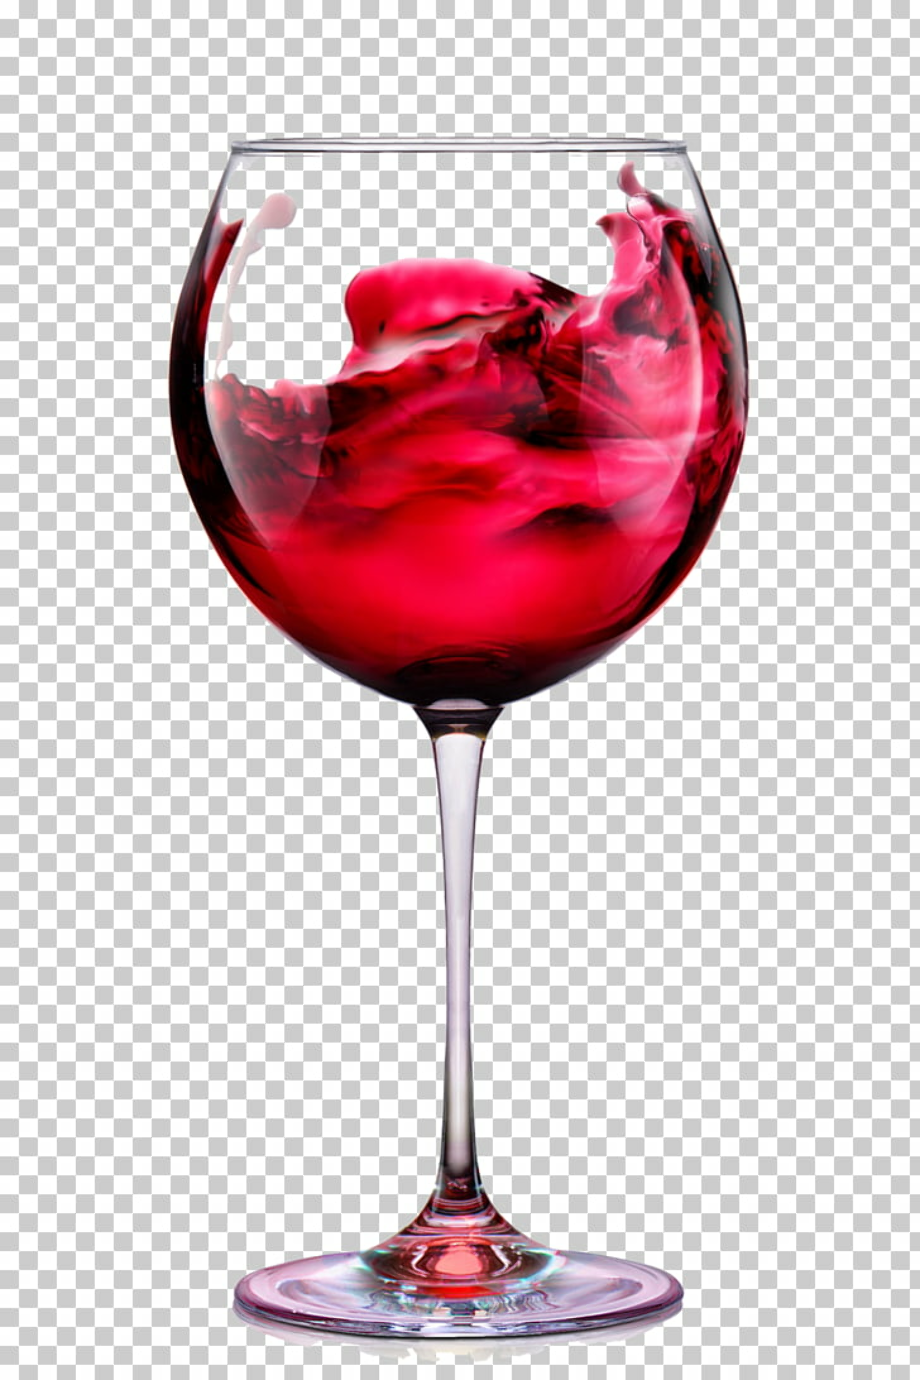 Download High Quality wine glass clipart splash Transparent PNG Images